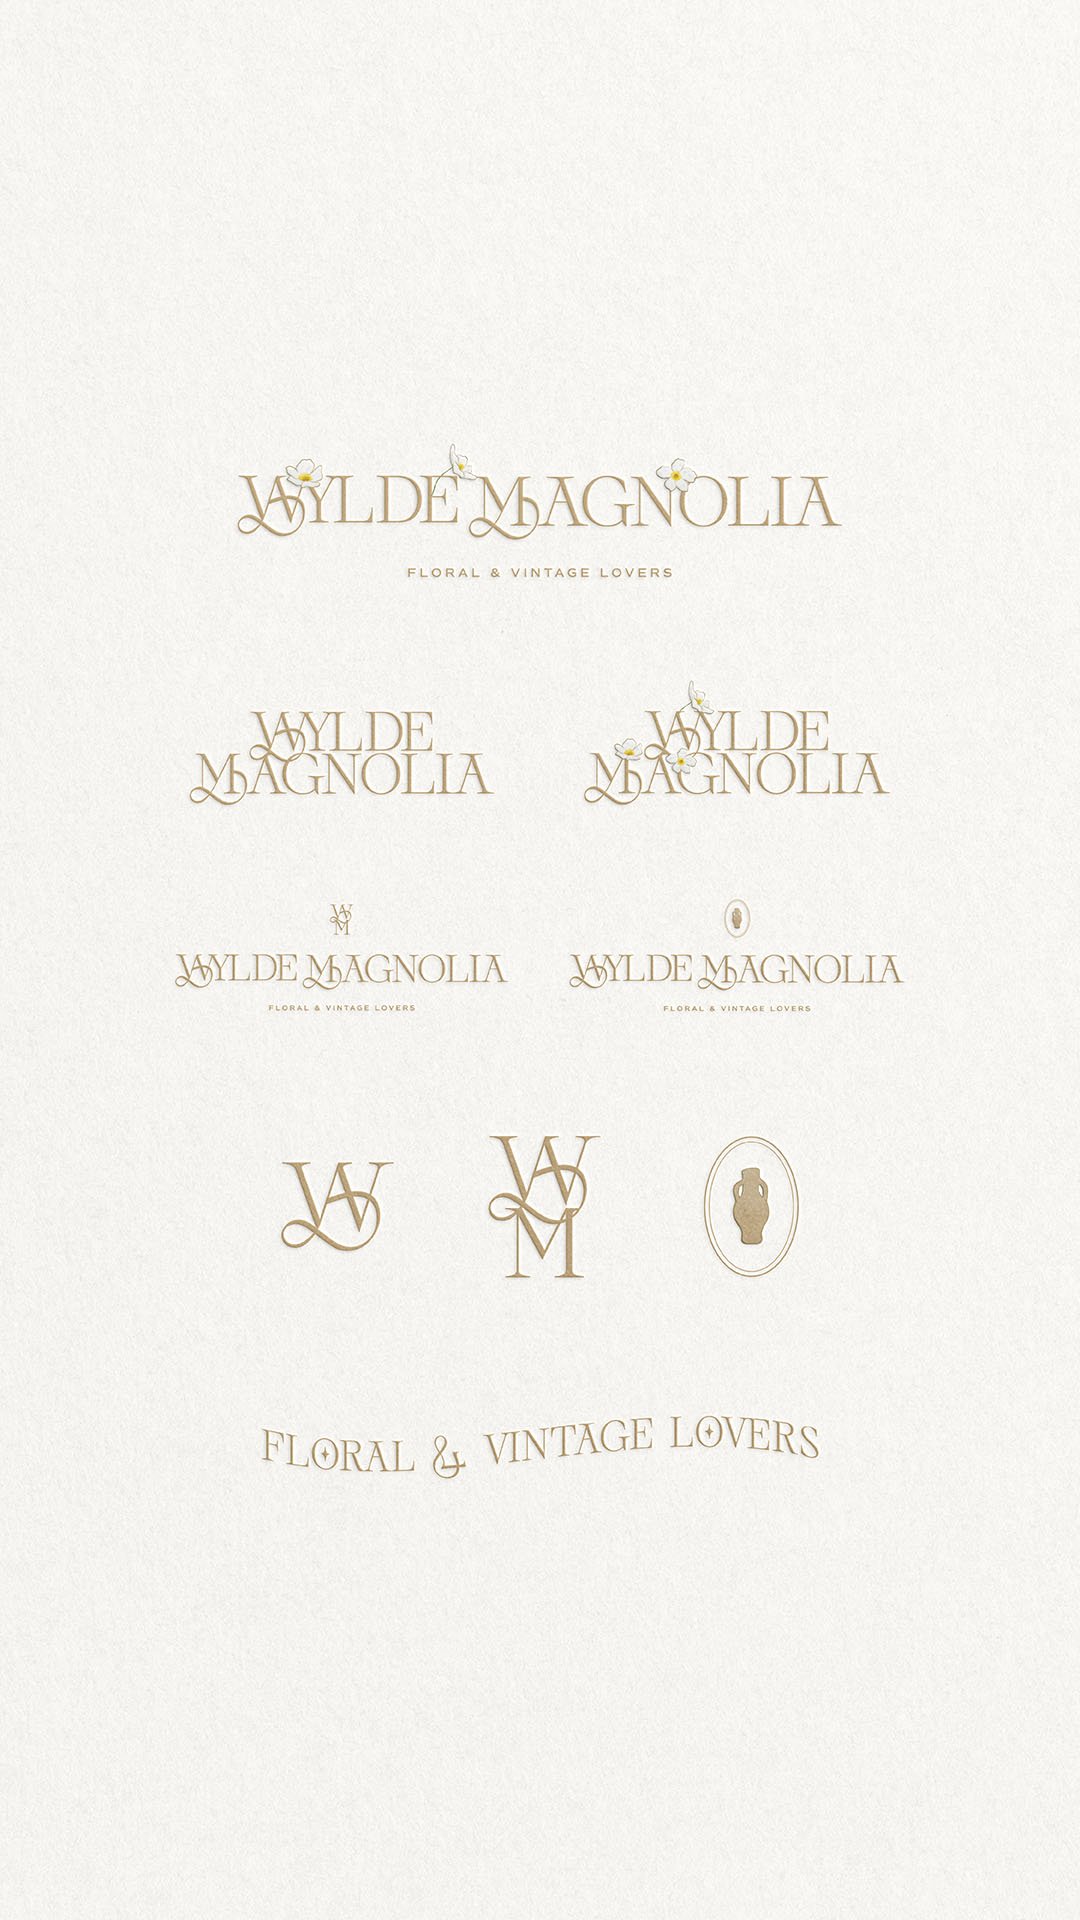 Wylde-Magnolia-brand-identity-05-SML.jpg